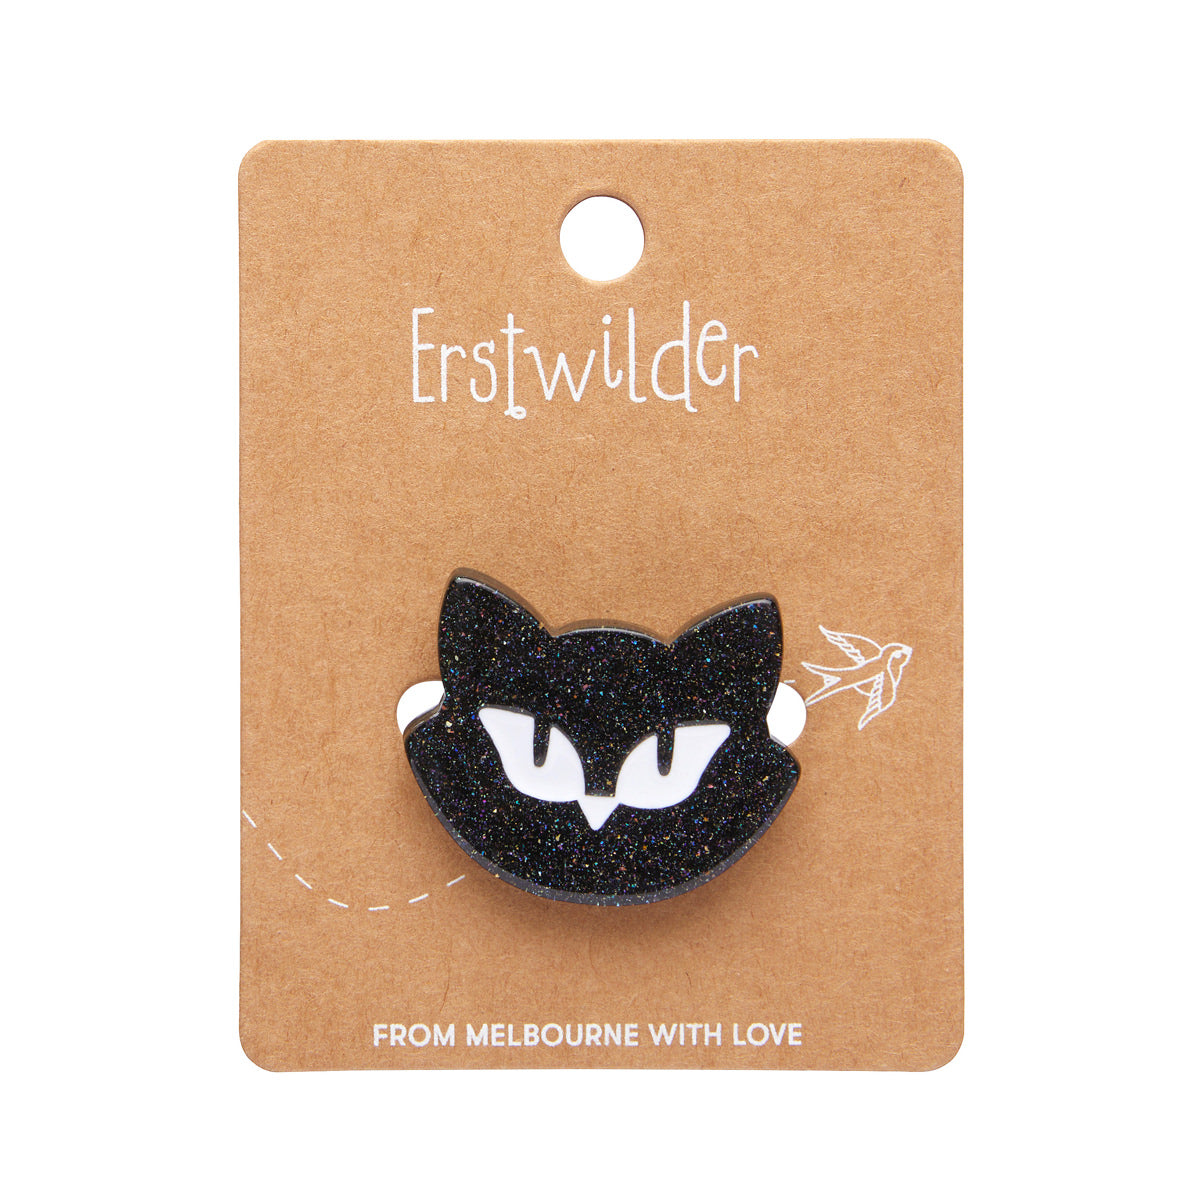 Shadow the Cat Mini Brooch by Erstwilder